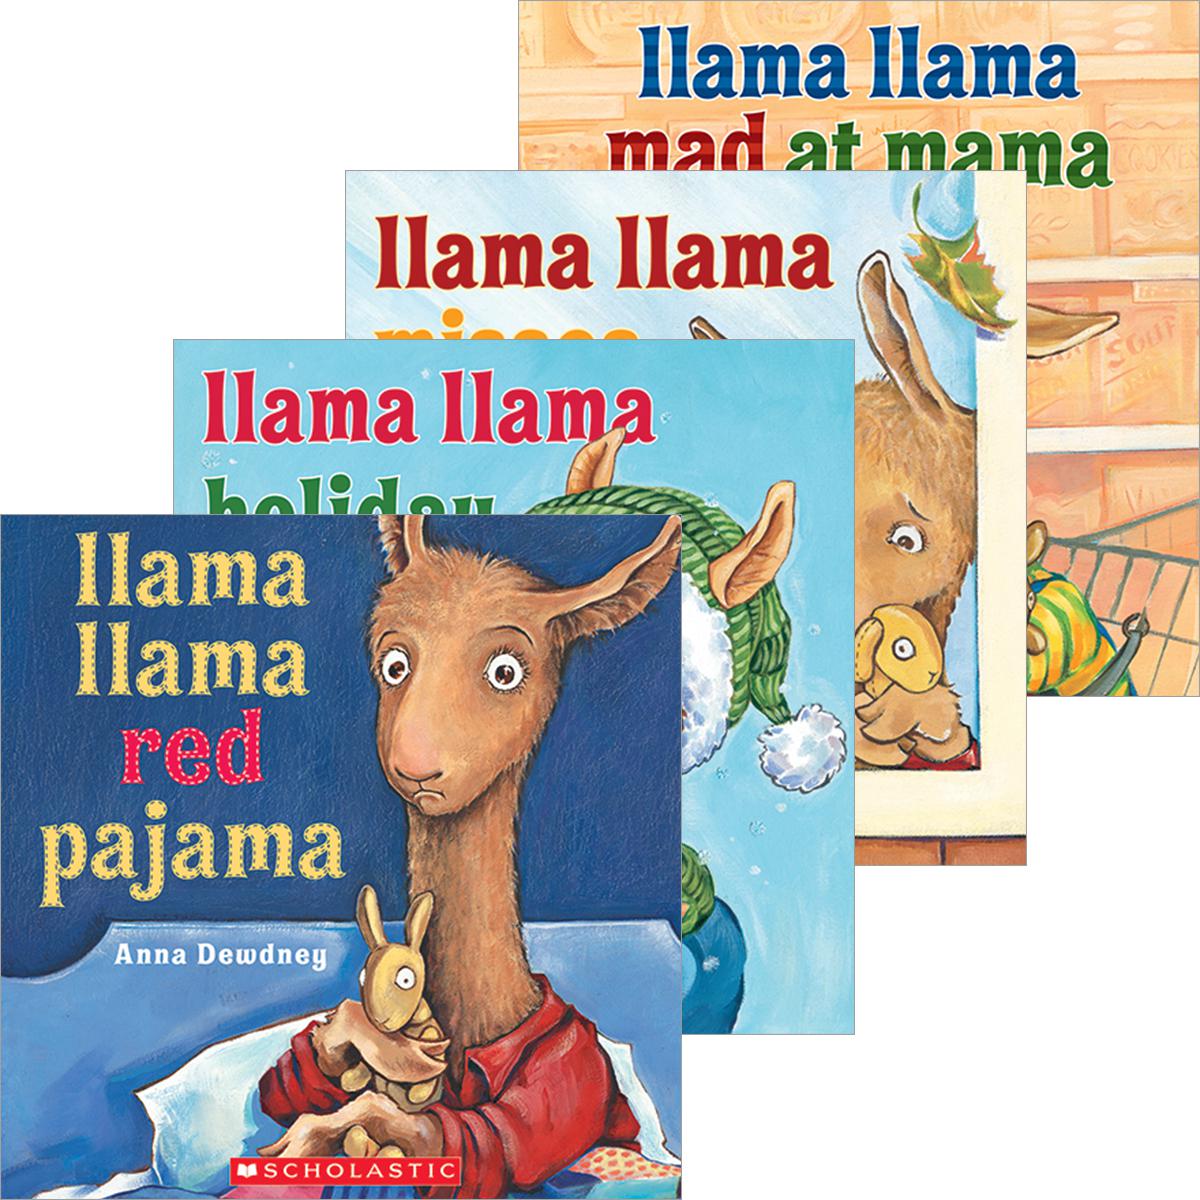  Llama Llama Collection 